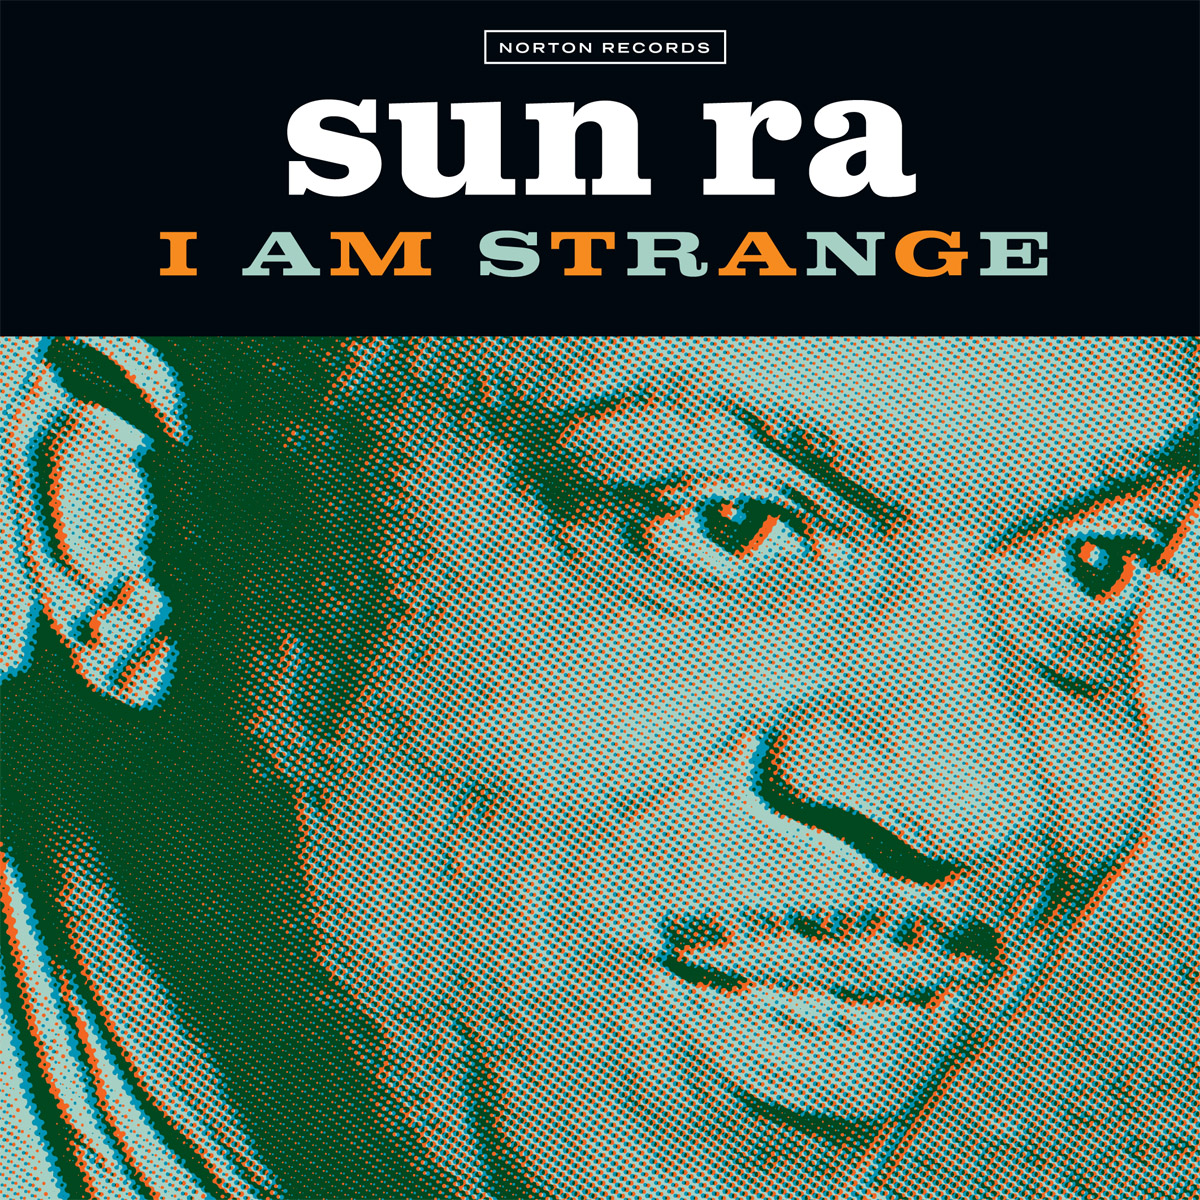 Sun Ra - I Am Strange 45 sleeve